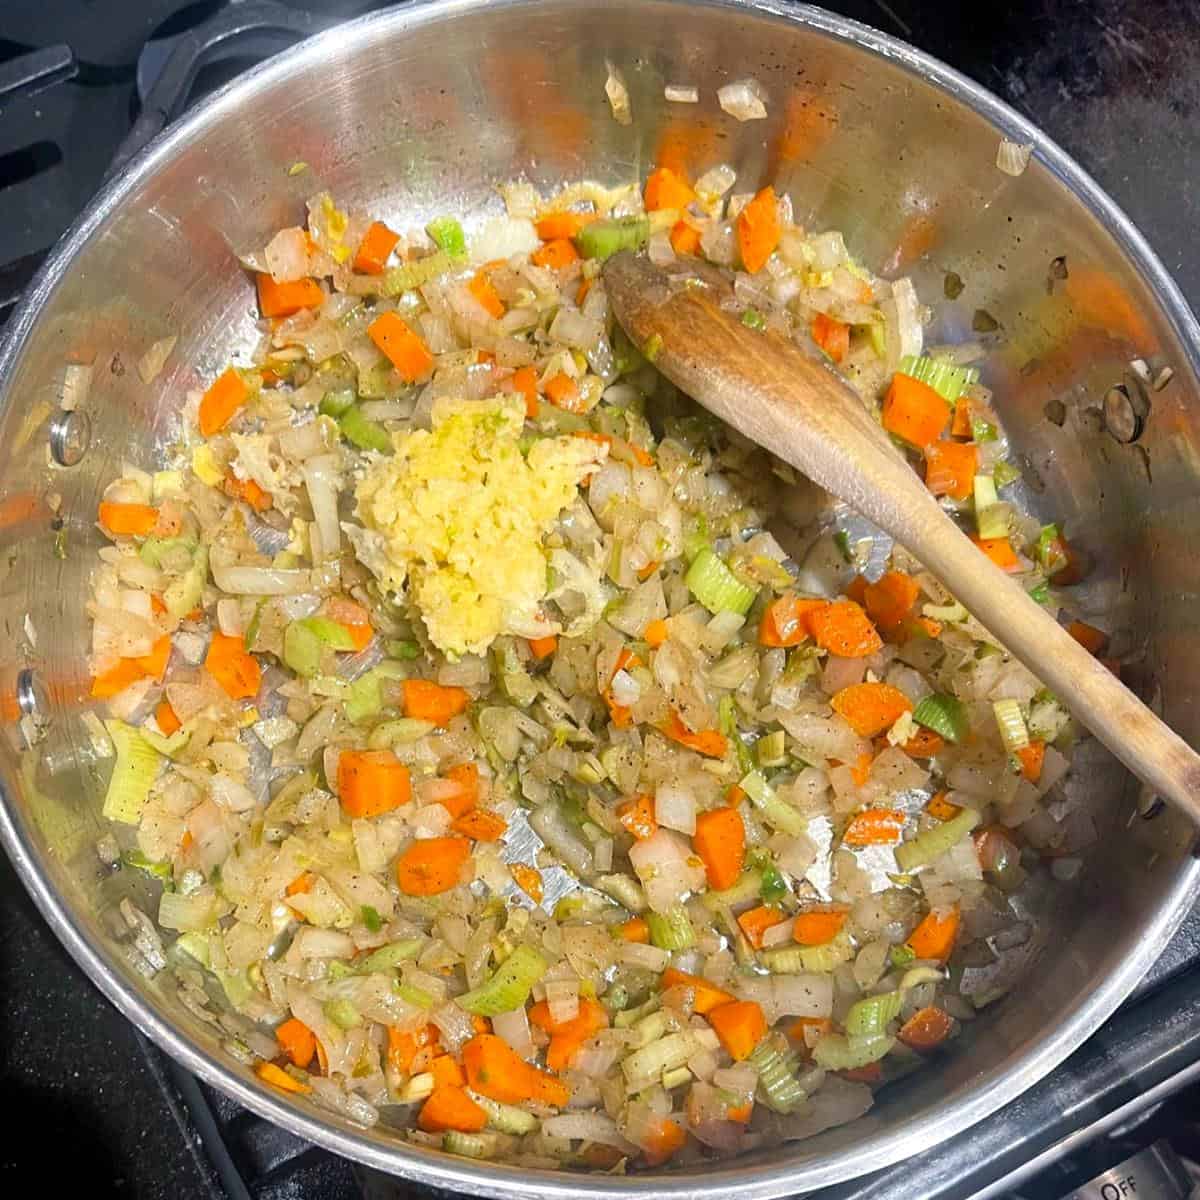 Garlic added to veggies in skillet.